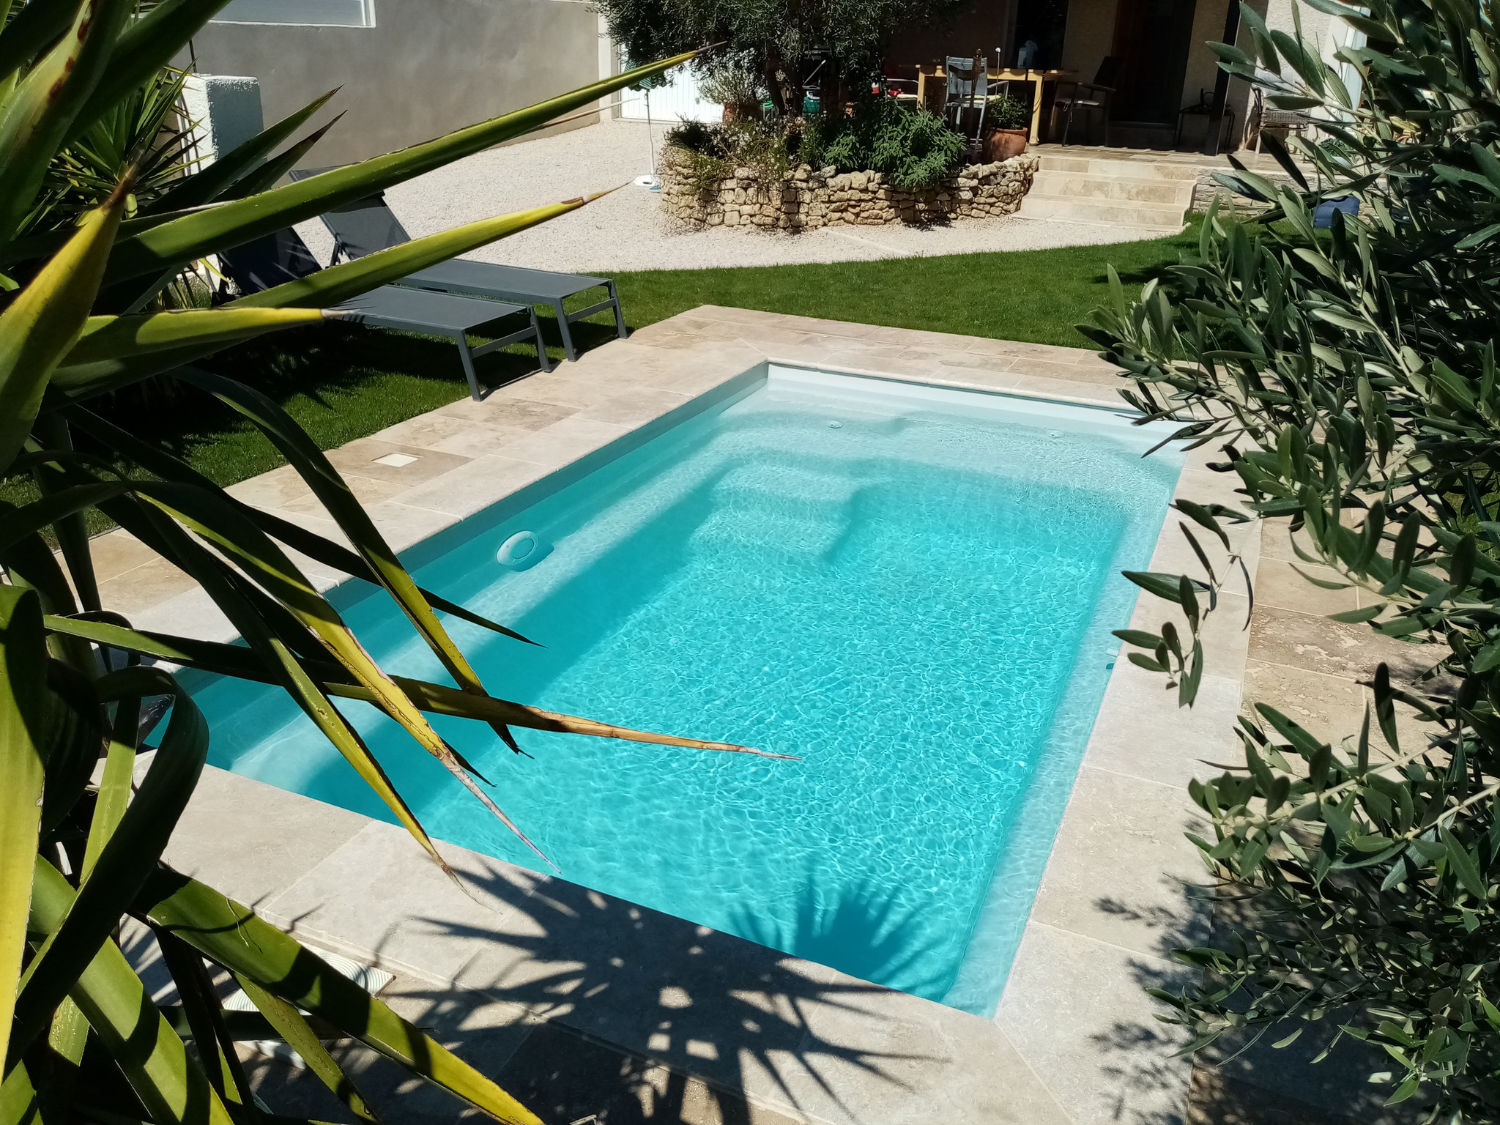 Une piscine coque installée dans un jardin